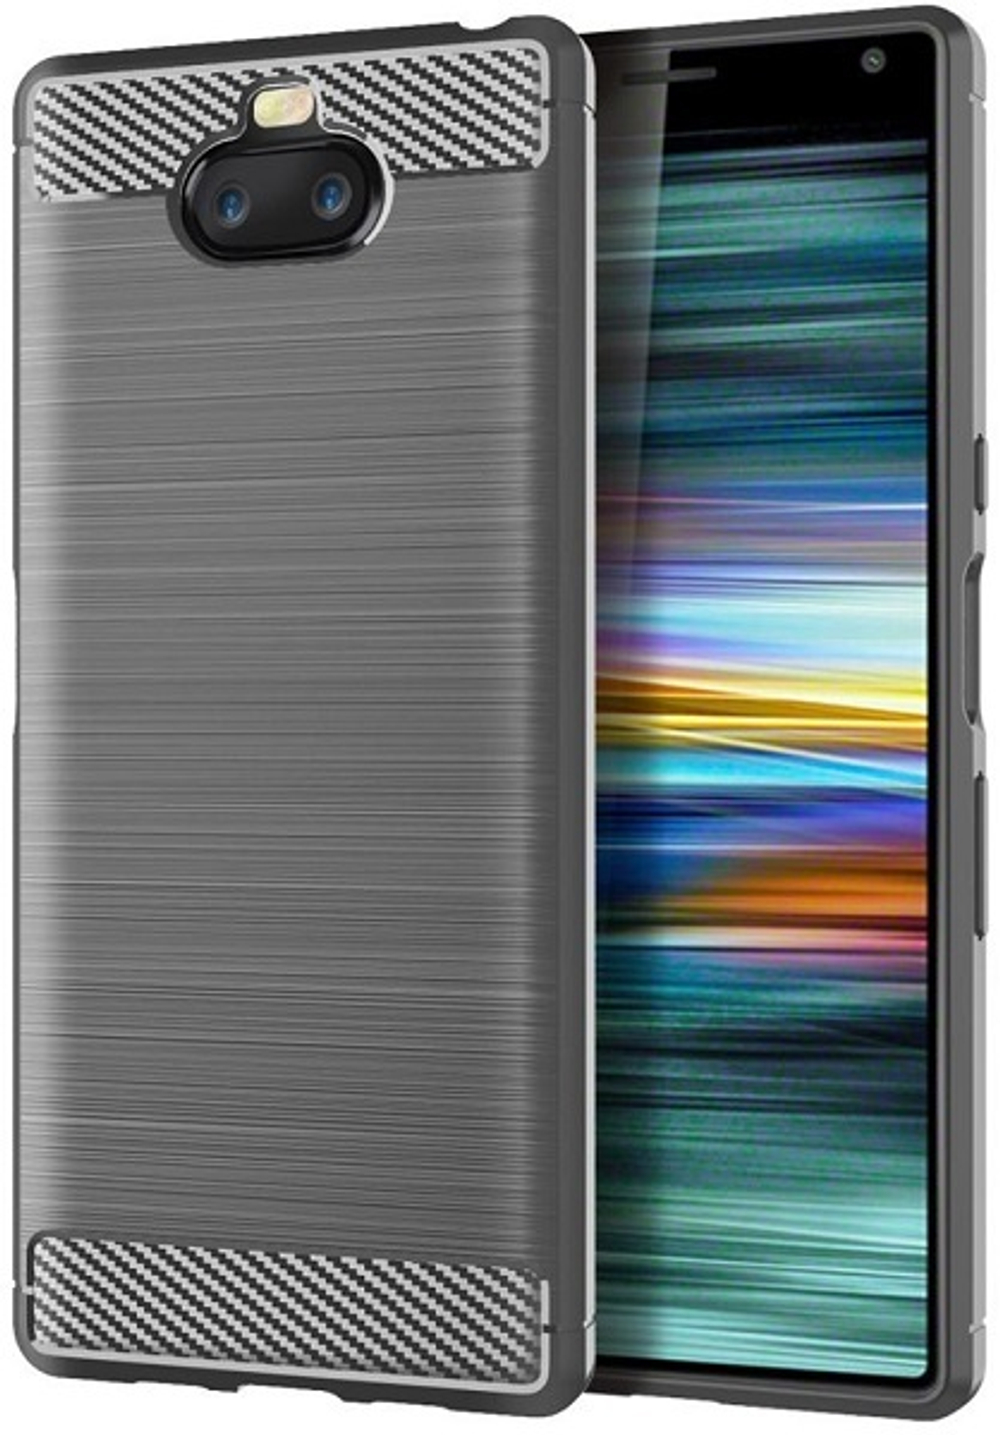 Чехол на Sony Xperia 10 цвет Gray (серый), серия Carbon от Caseport